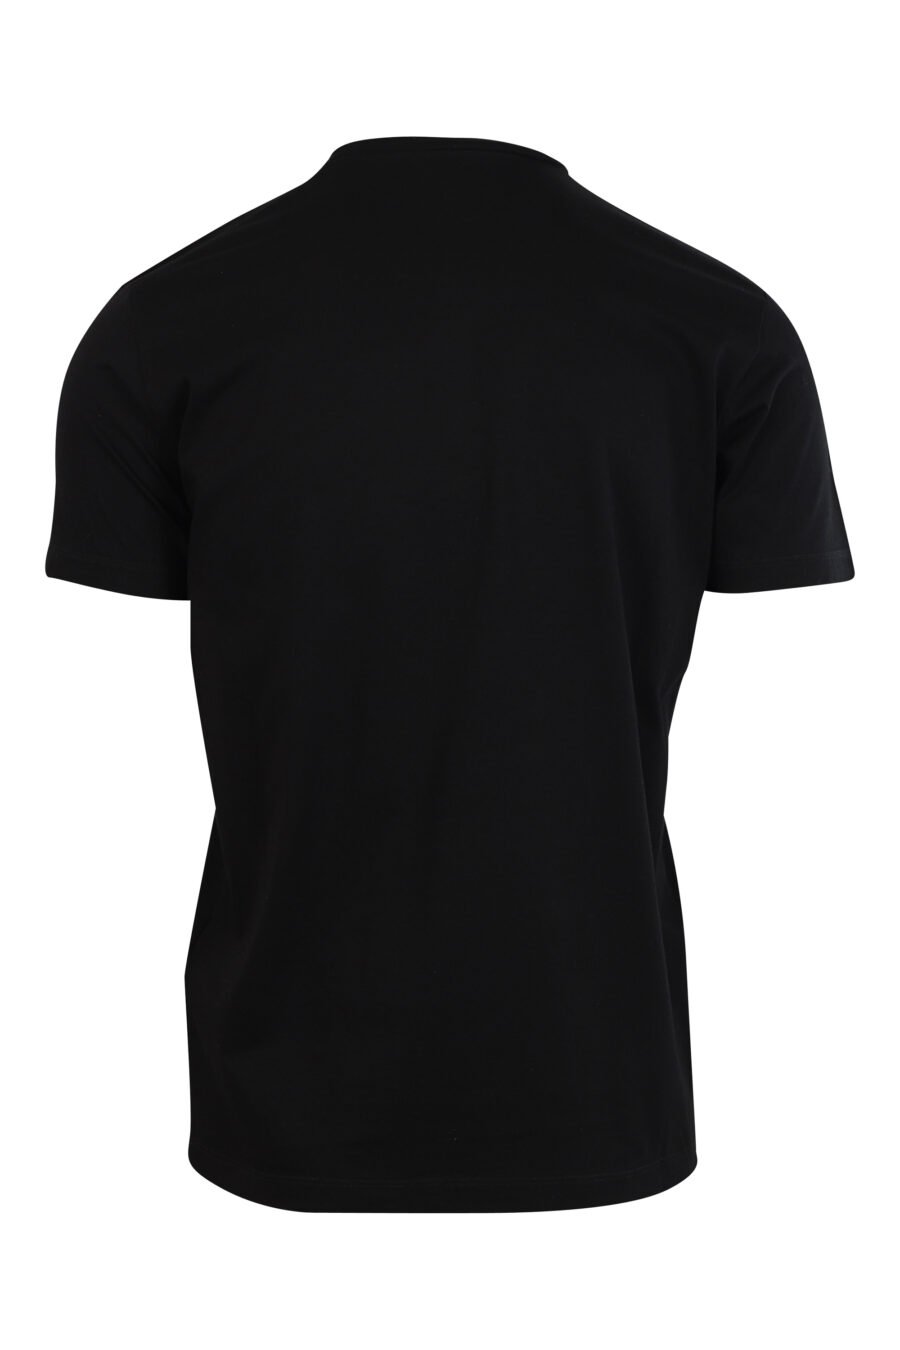 T-shirt schwarz mit Maxilogo "Ikone Herz Pixel" - 8052134980910 2